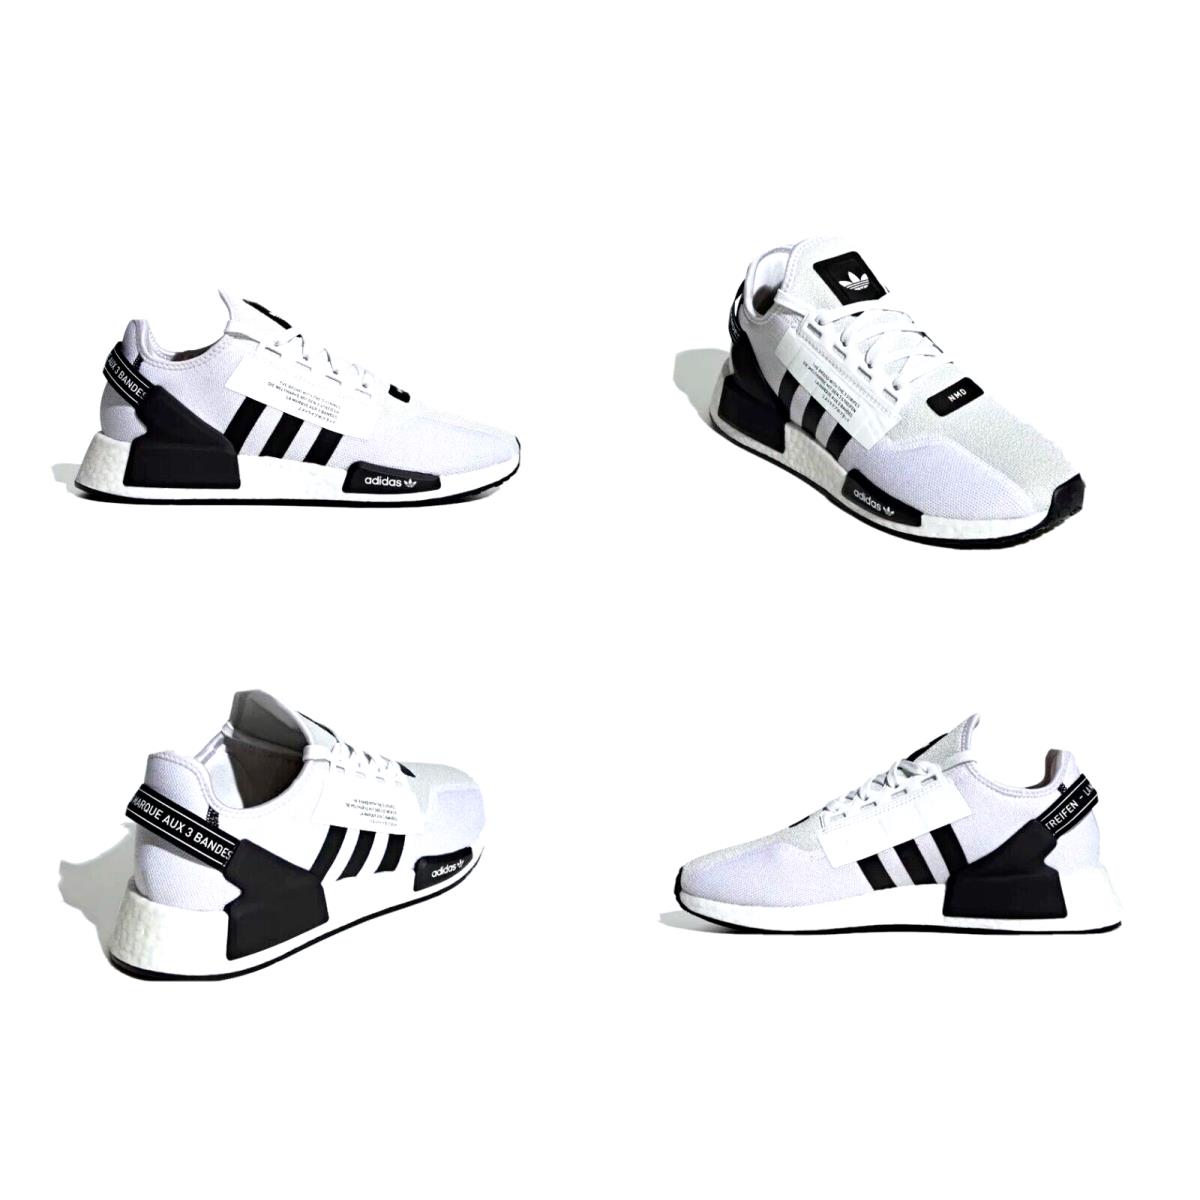 Adidas Nmd R1.V2 Boost White / Black Mens Running Shoes Size 11.5 US GX6368